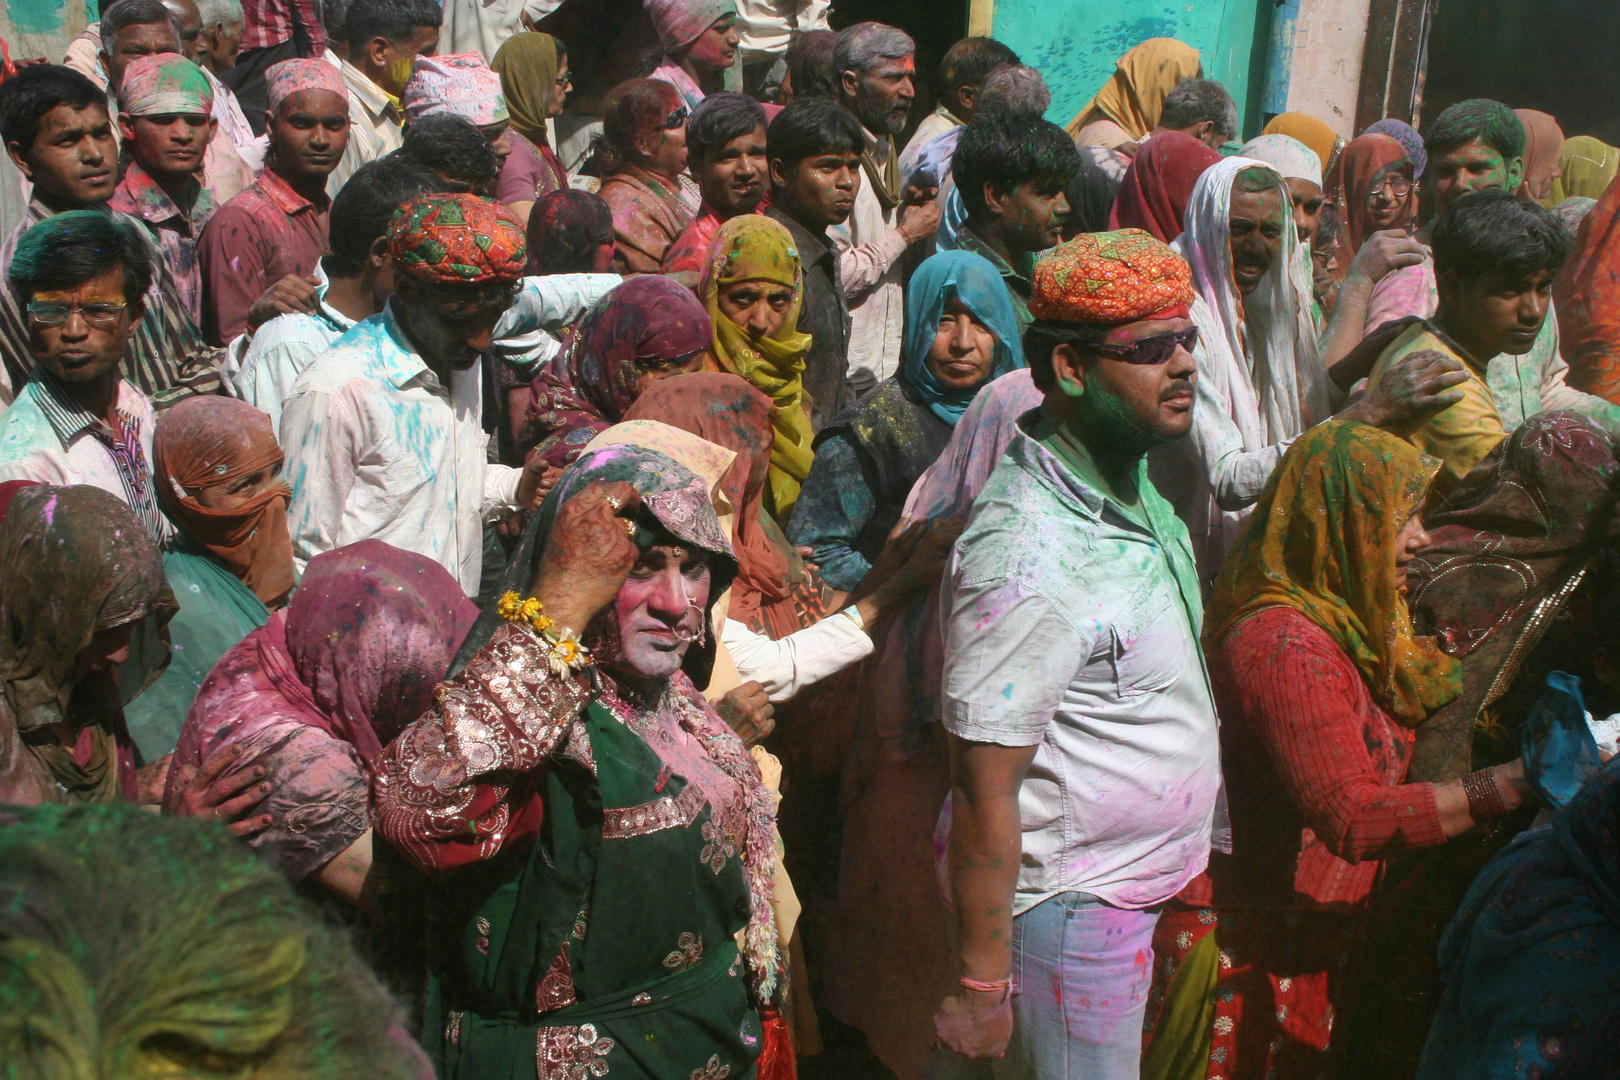 Holi Festival in India